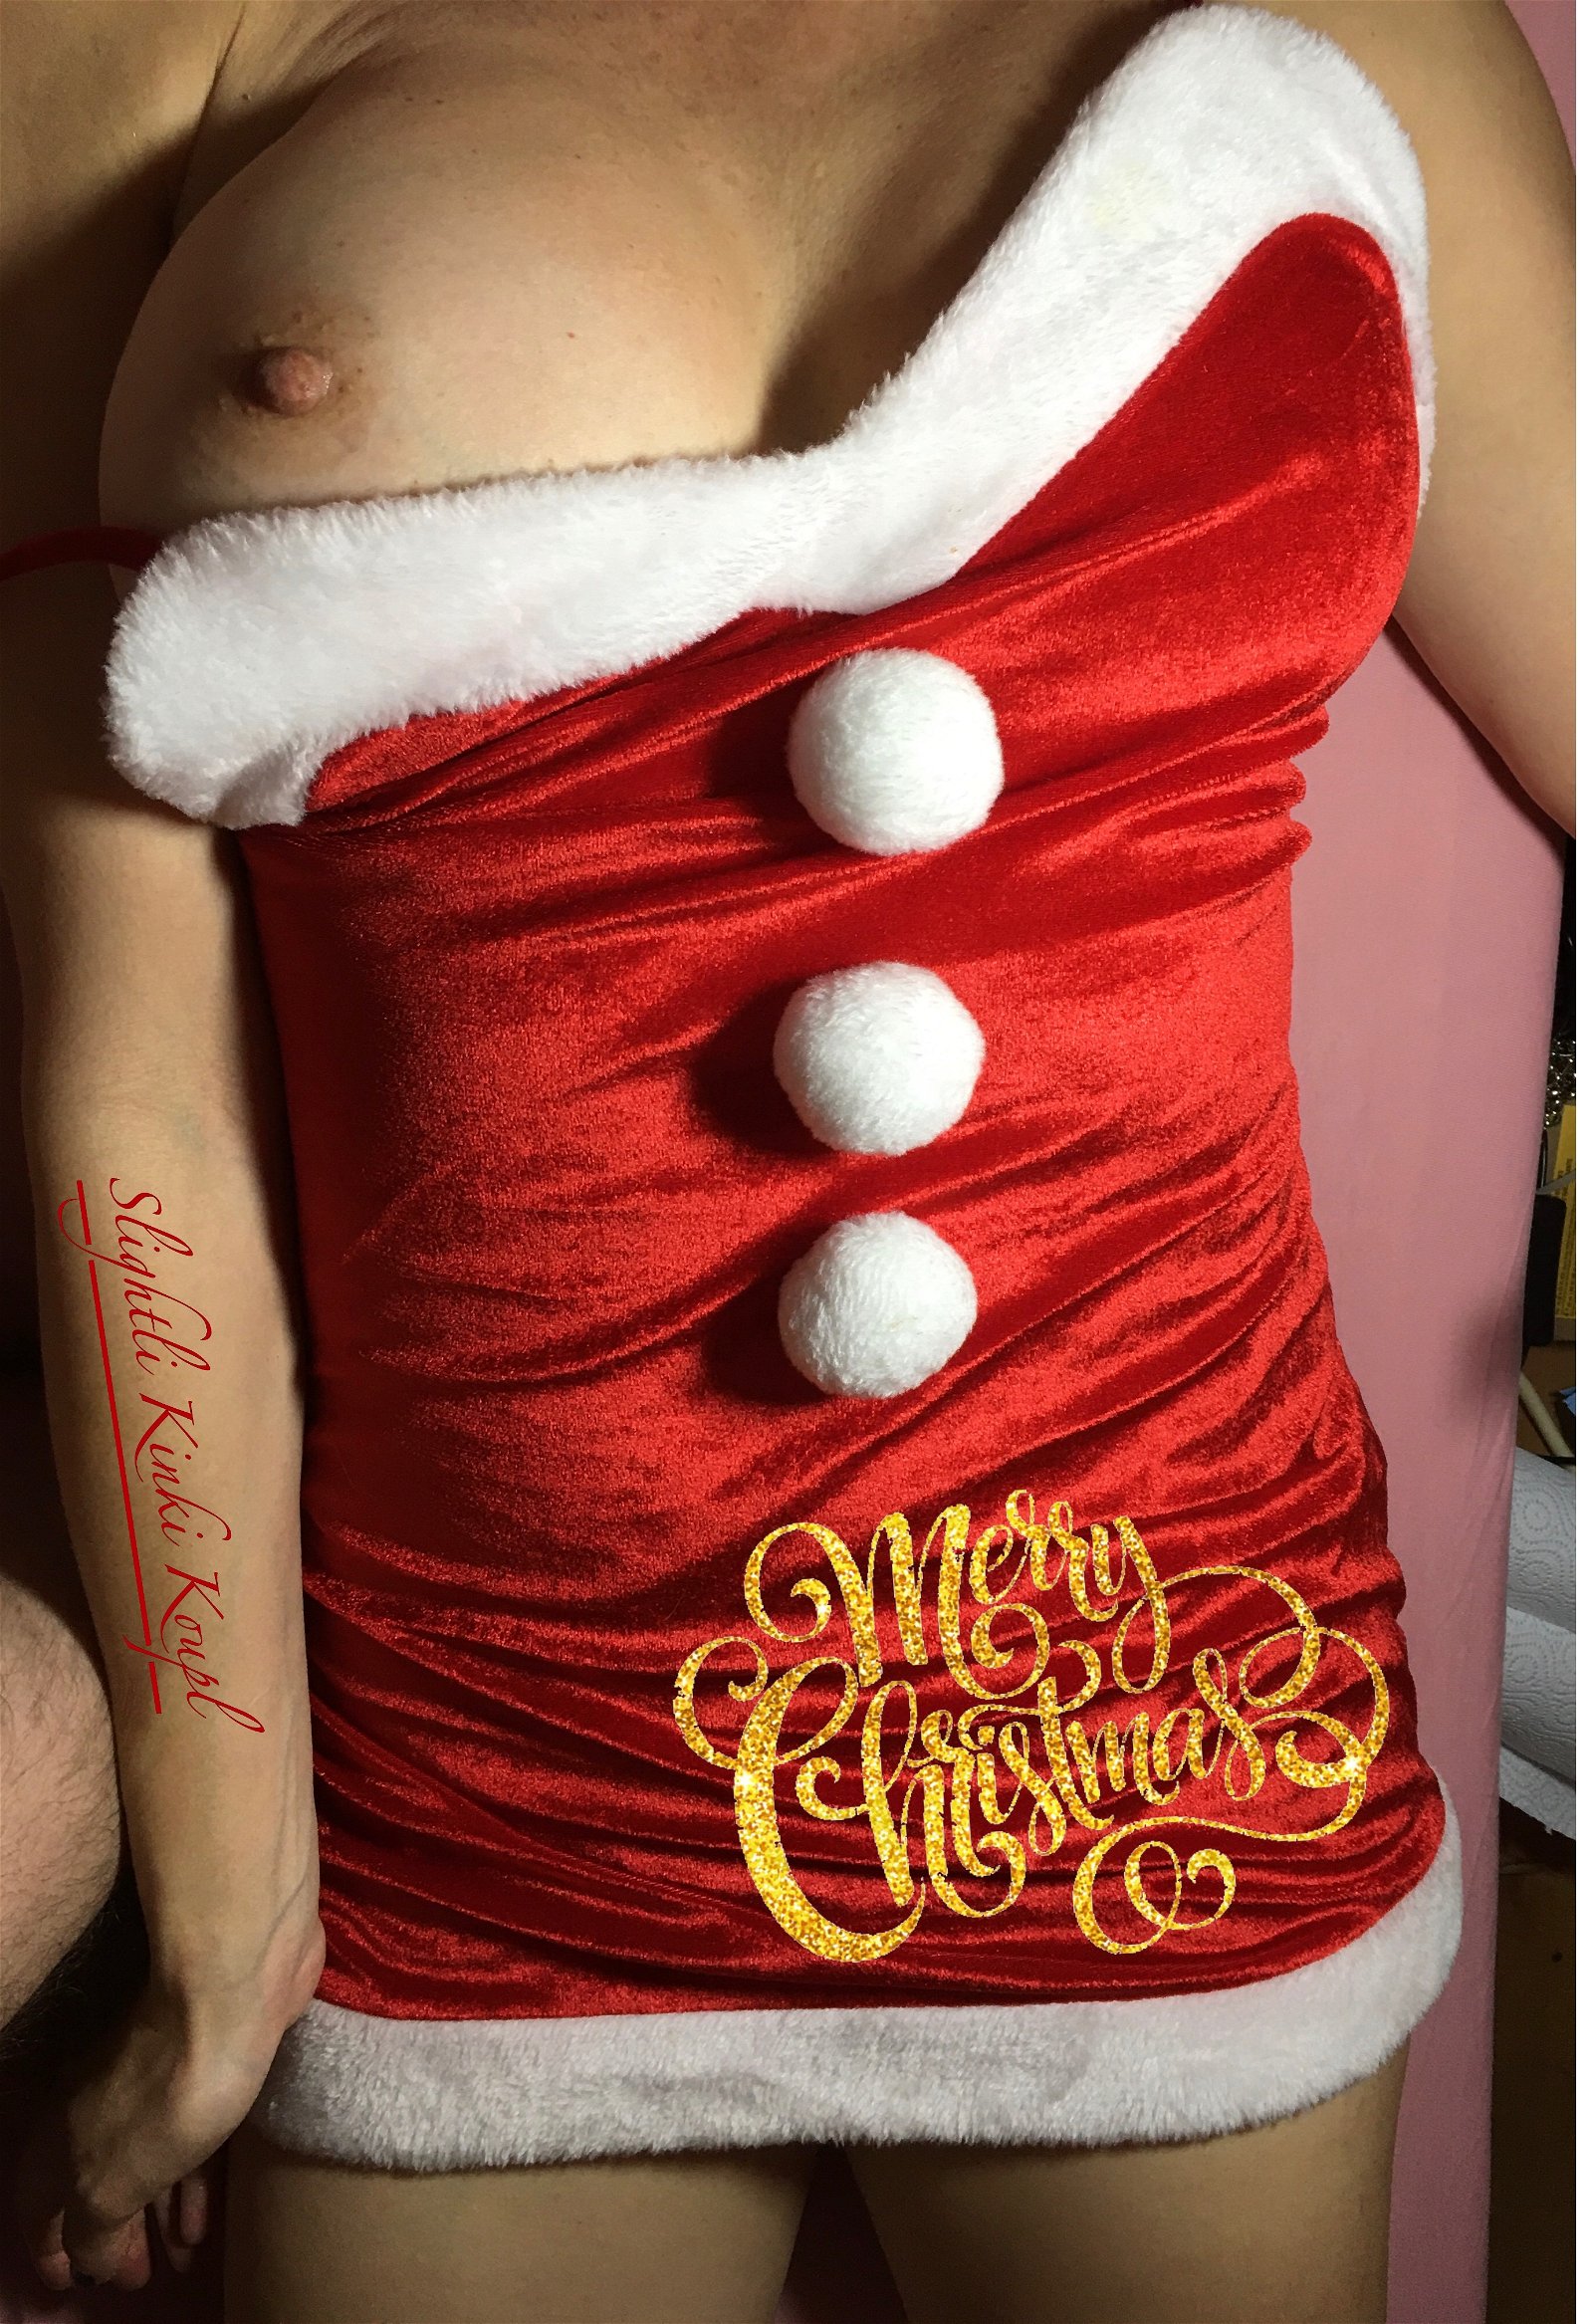 Photo by Slightli Kinki Koupl with the username @SlightliKinkiKoupl, who is a star user,  December 24, 2020 at 10:43 AM and the text says '#Merry #XXX #Mas'